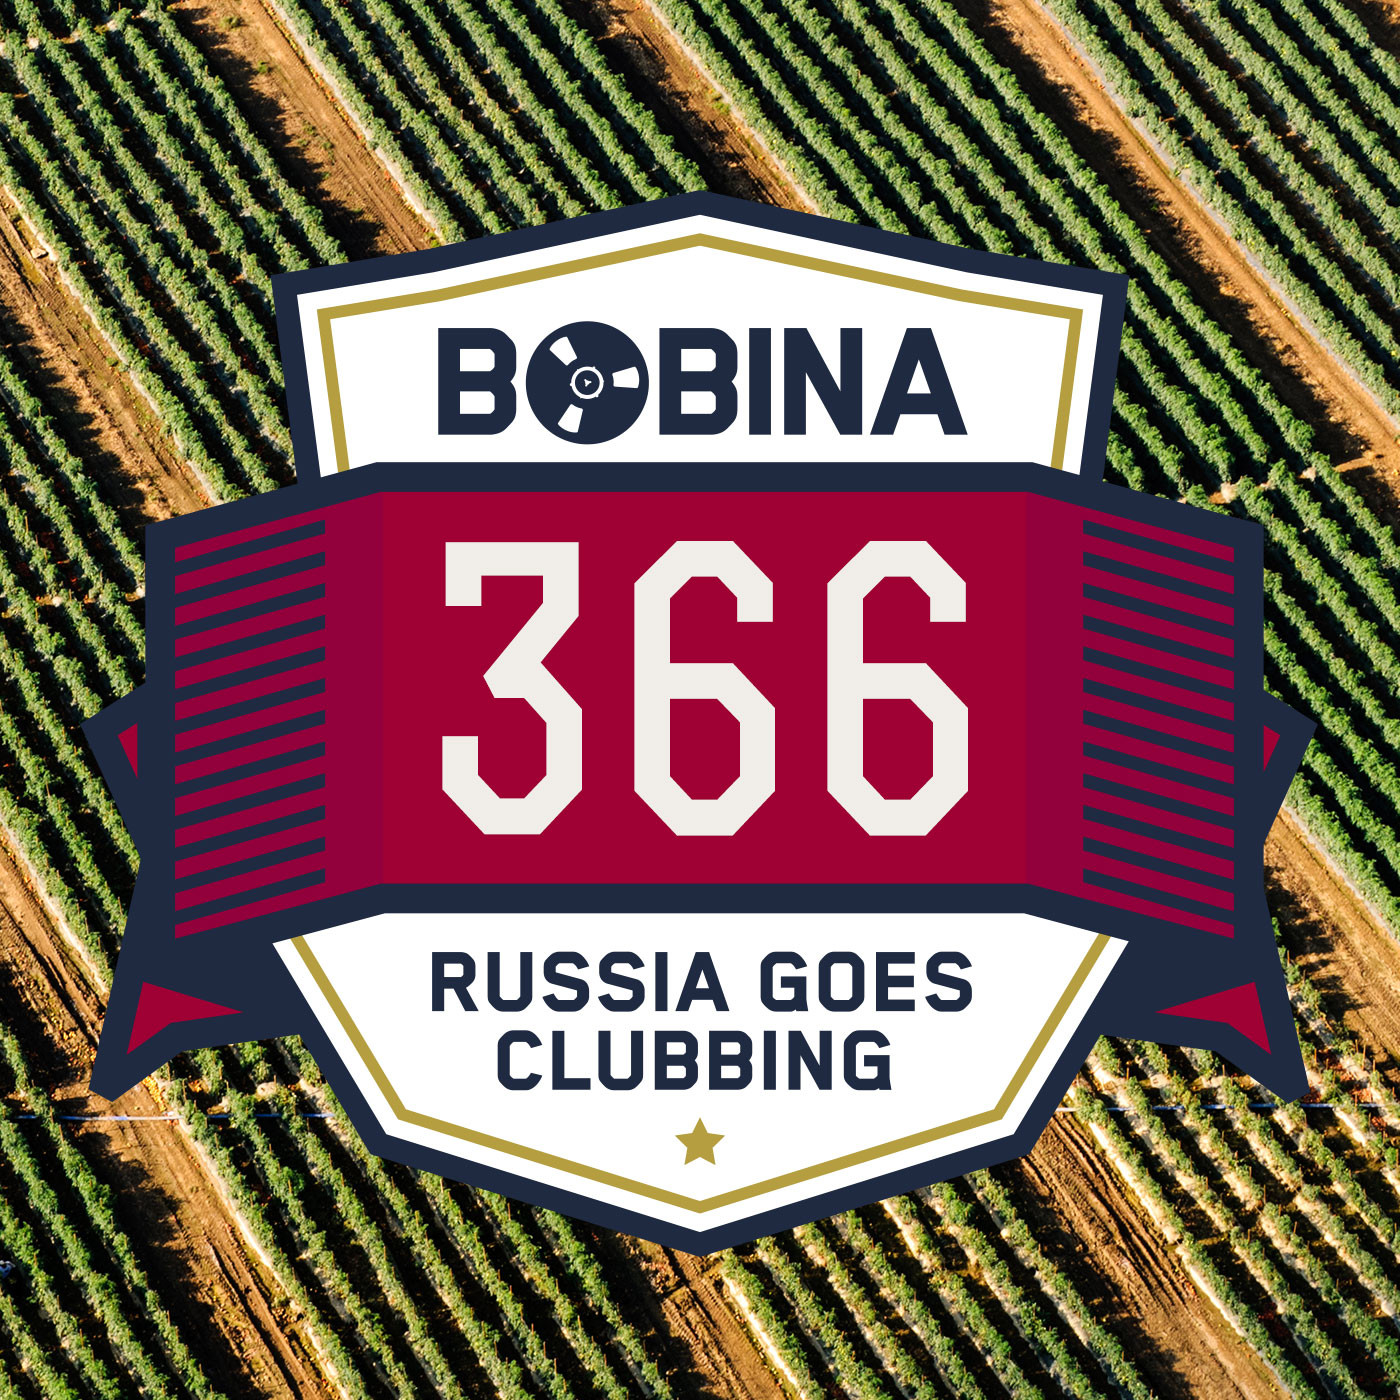 Bobina - Russia goes Clubbing. Гоу раша. Go to the Club. Go Russia go. How to go to russia